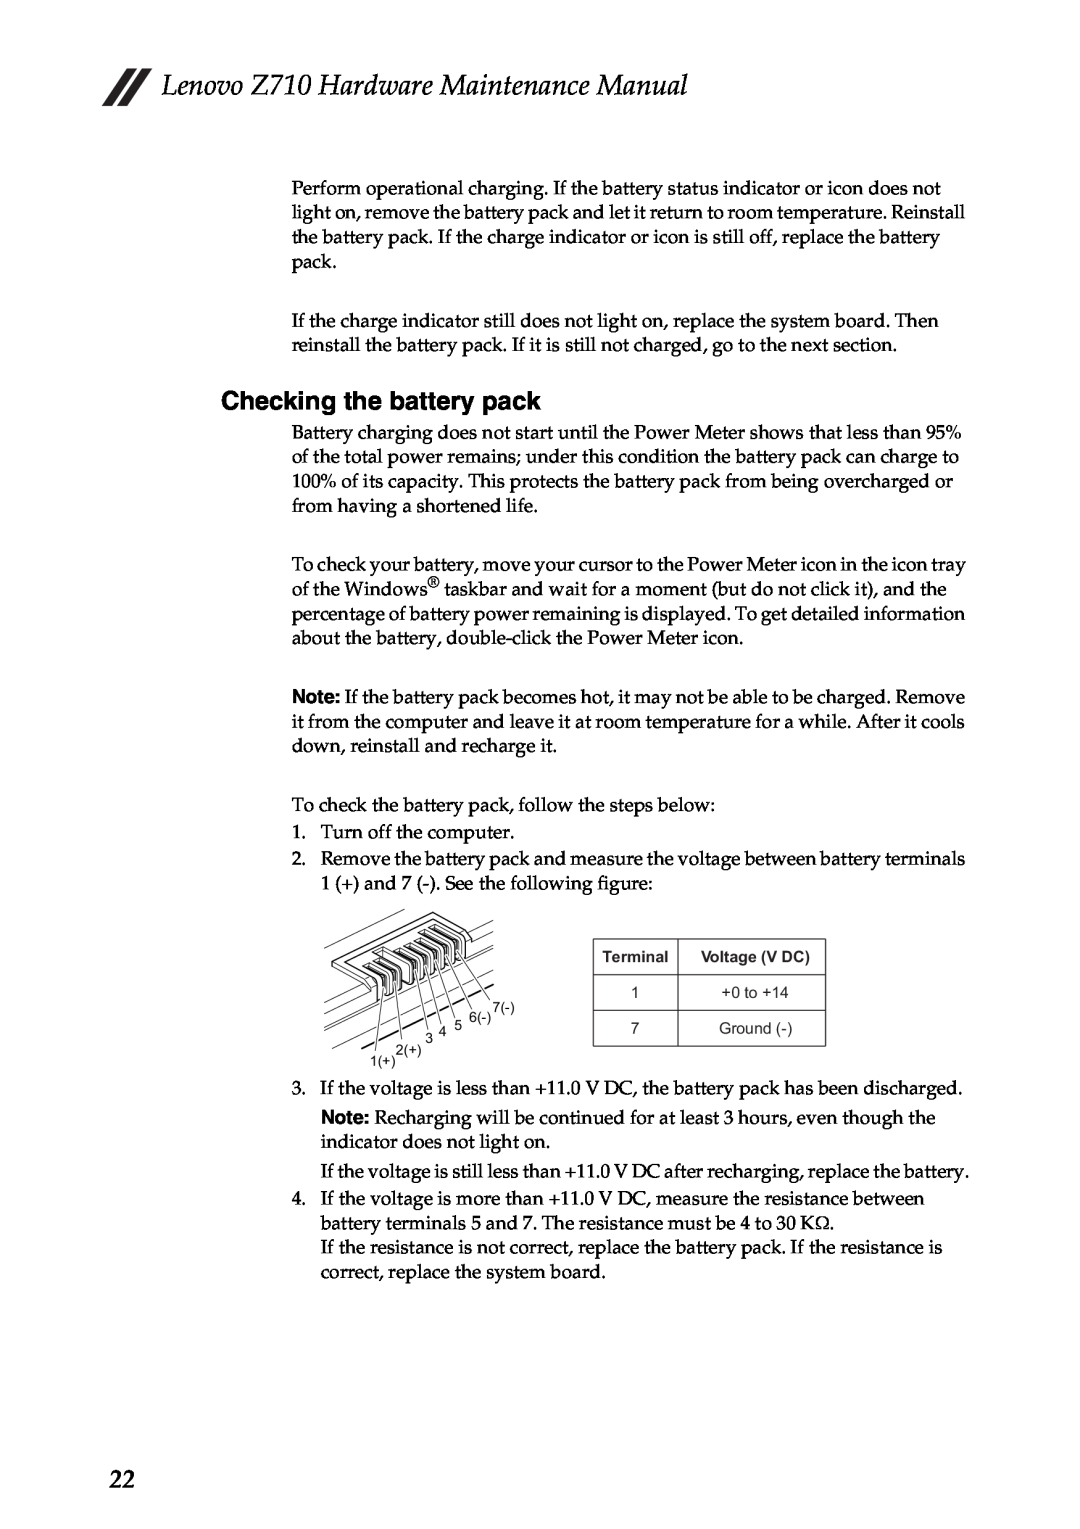 Lenovo manual Checking the battery pack, Lenovo Z710 Hardware Maintenance Manual 